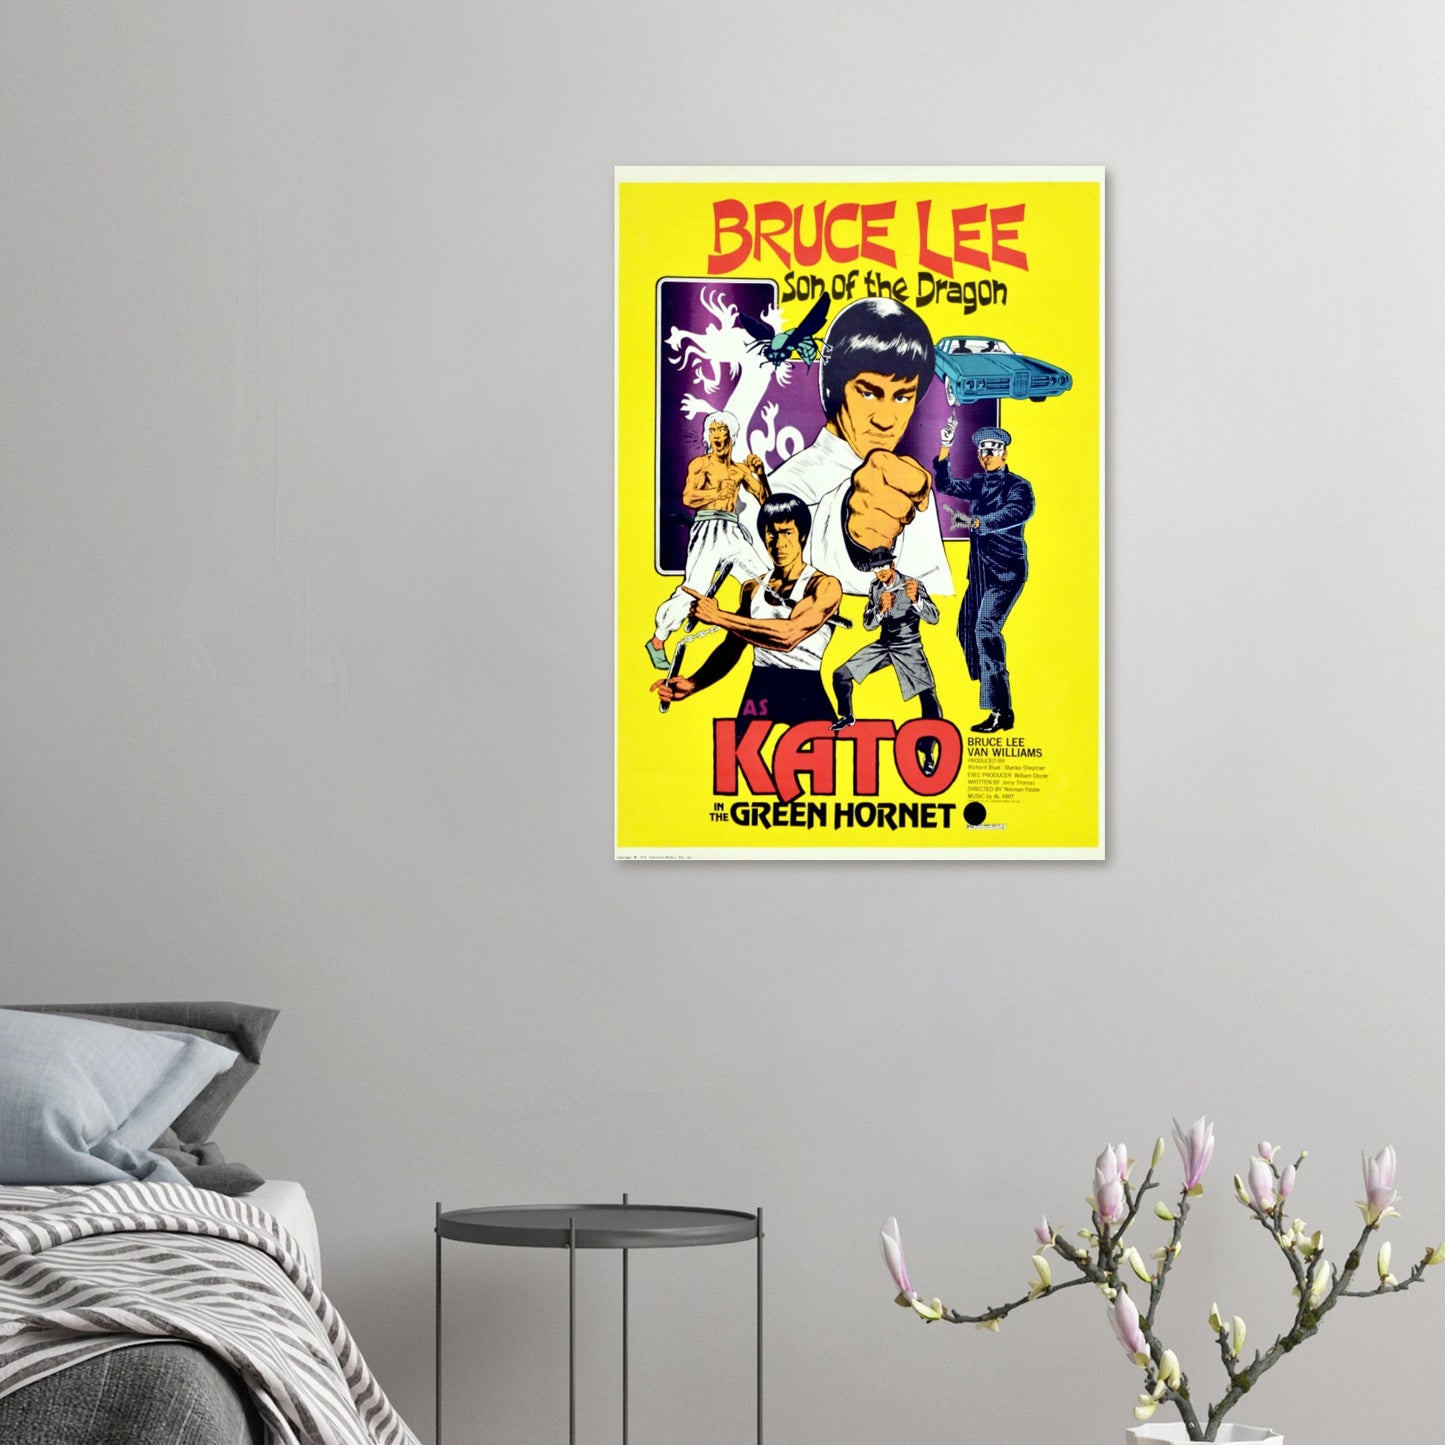 Bruce Lee Vintage Poster Reprint on Premium Matte Paper